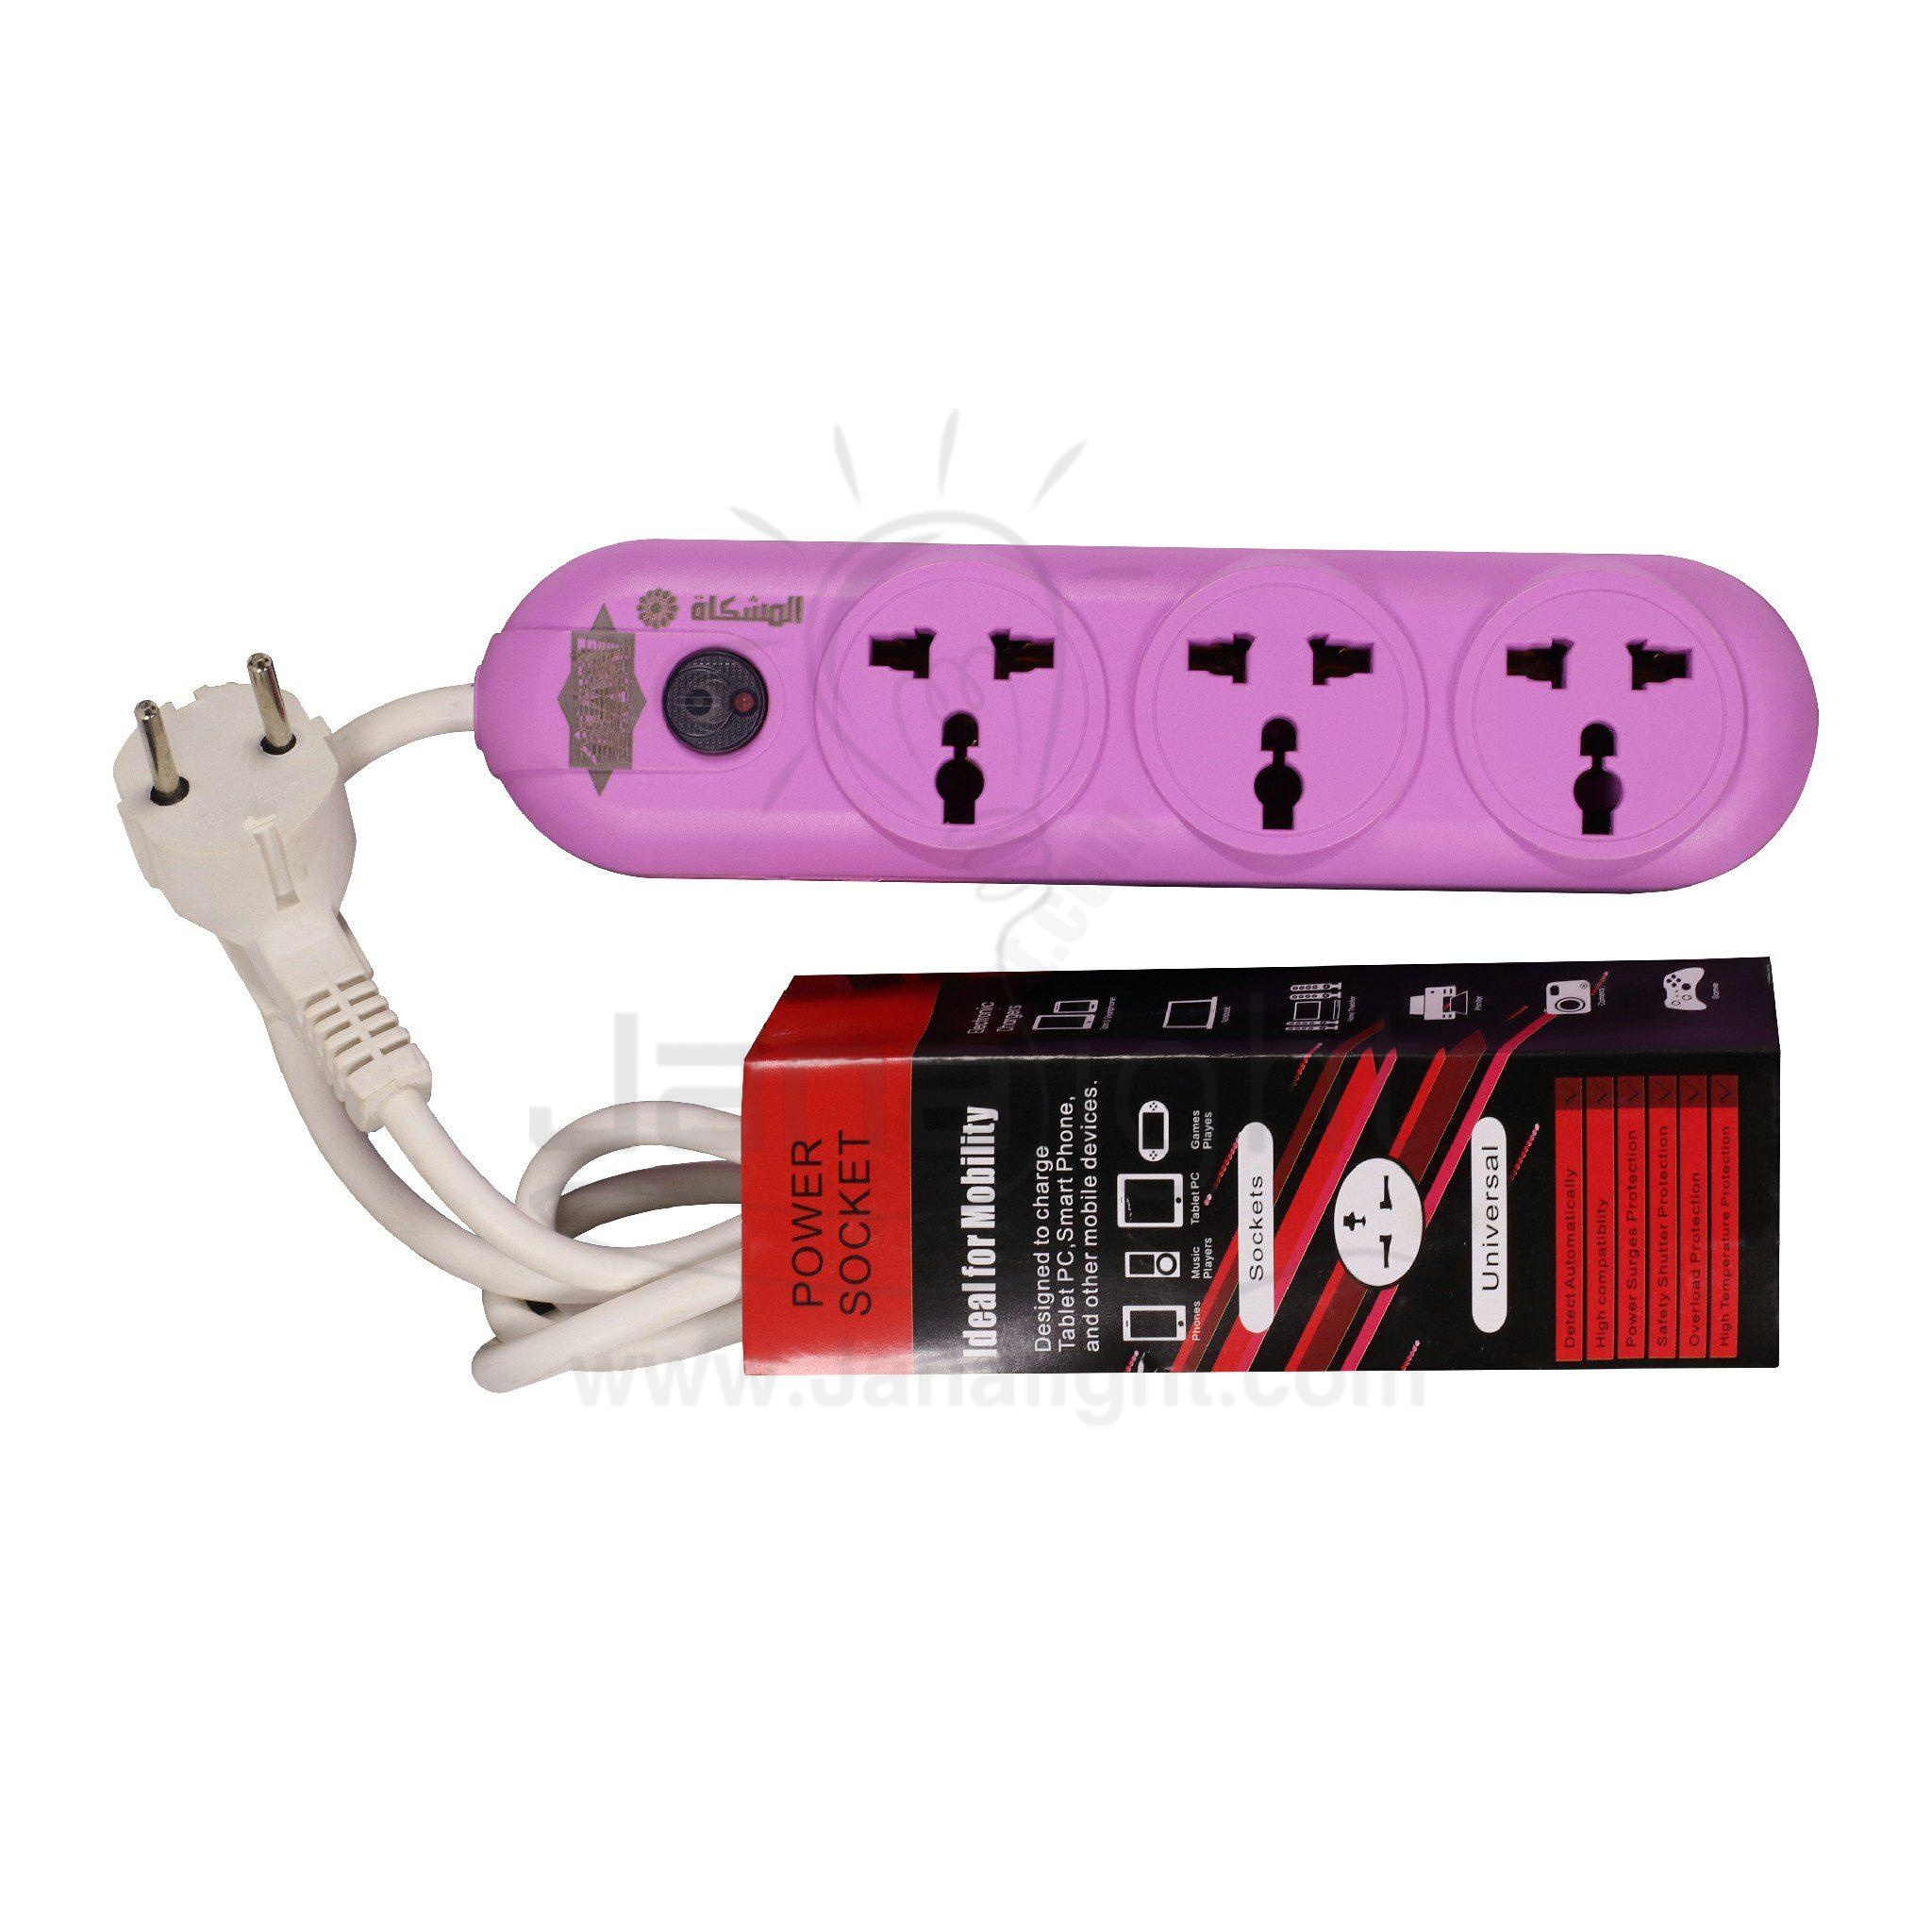 مشترك 3 عين انكليزي بسلك 2 متر multi socket plug 3-English socket outlet with 2-meter cabled codeHK 3023